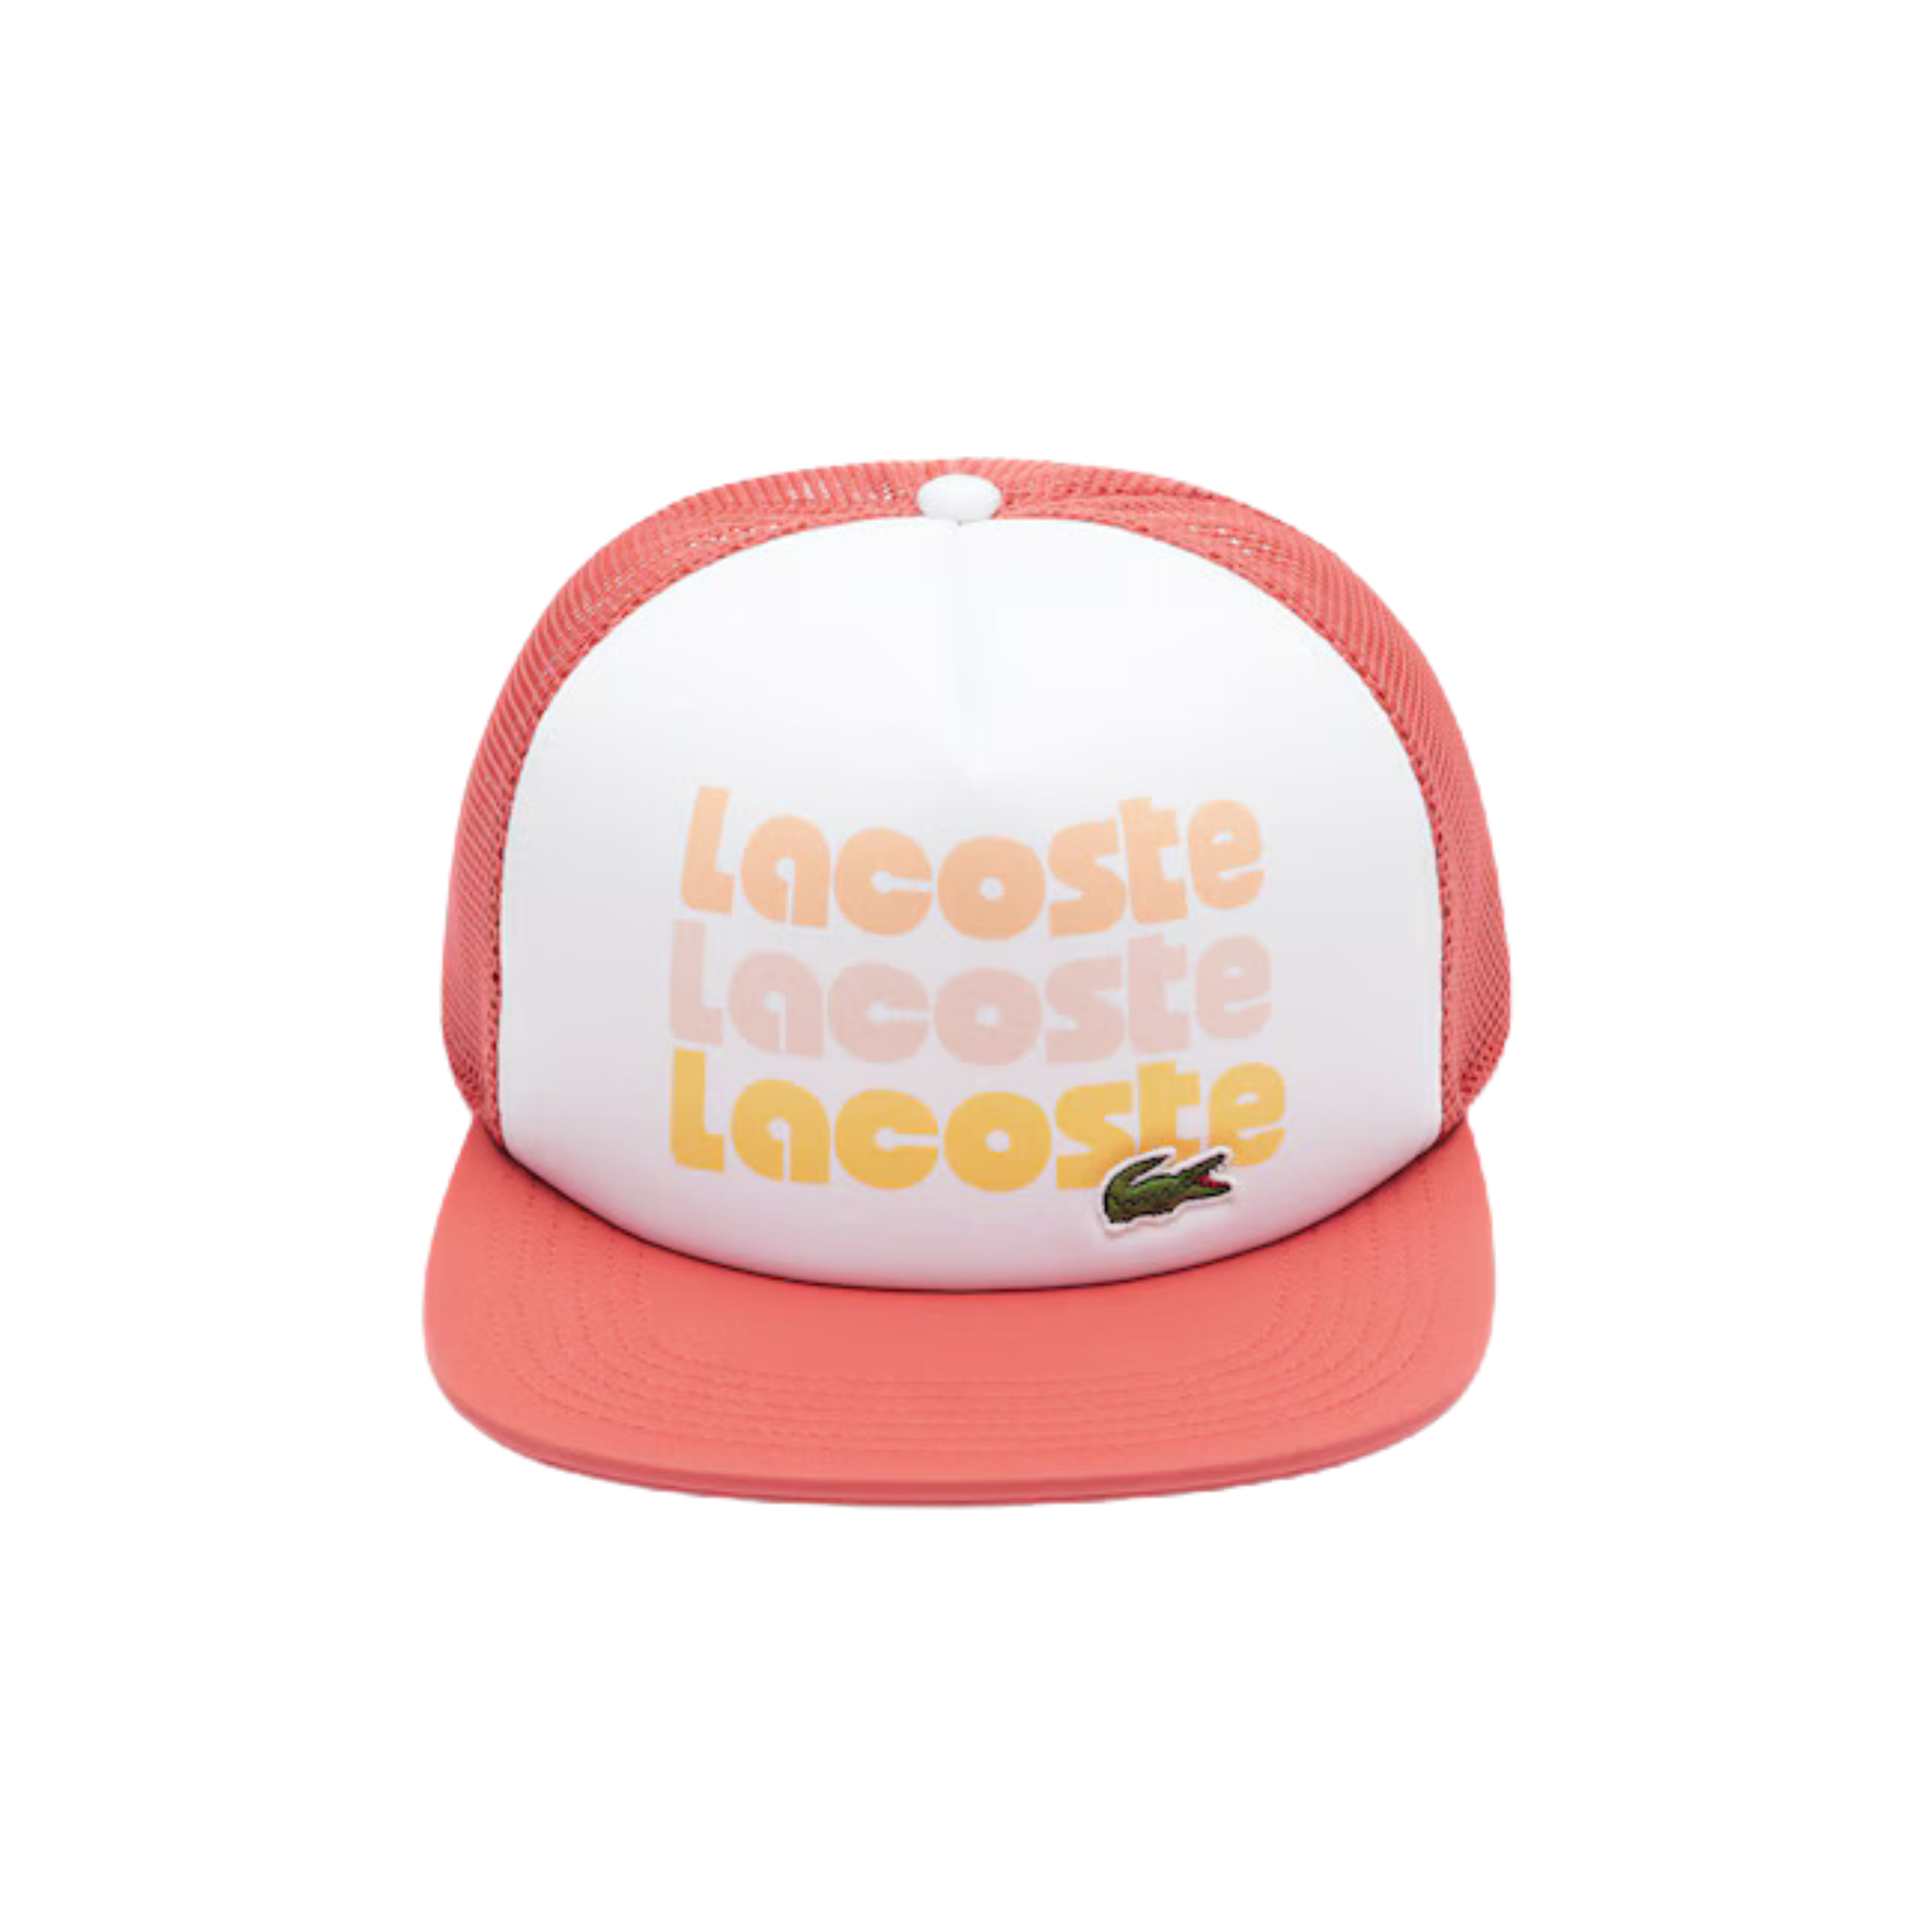 Lacoste Unisex Print Trucker Cap (White/Pink) RK7886 - Lacoste